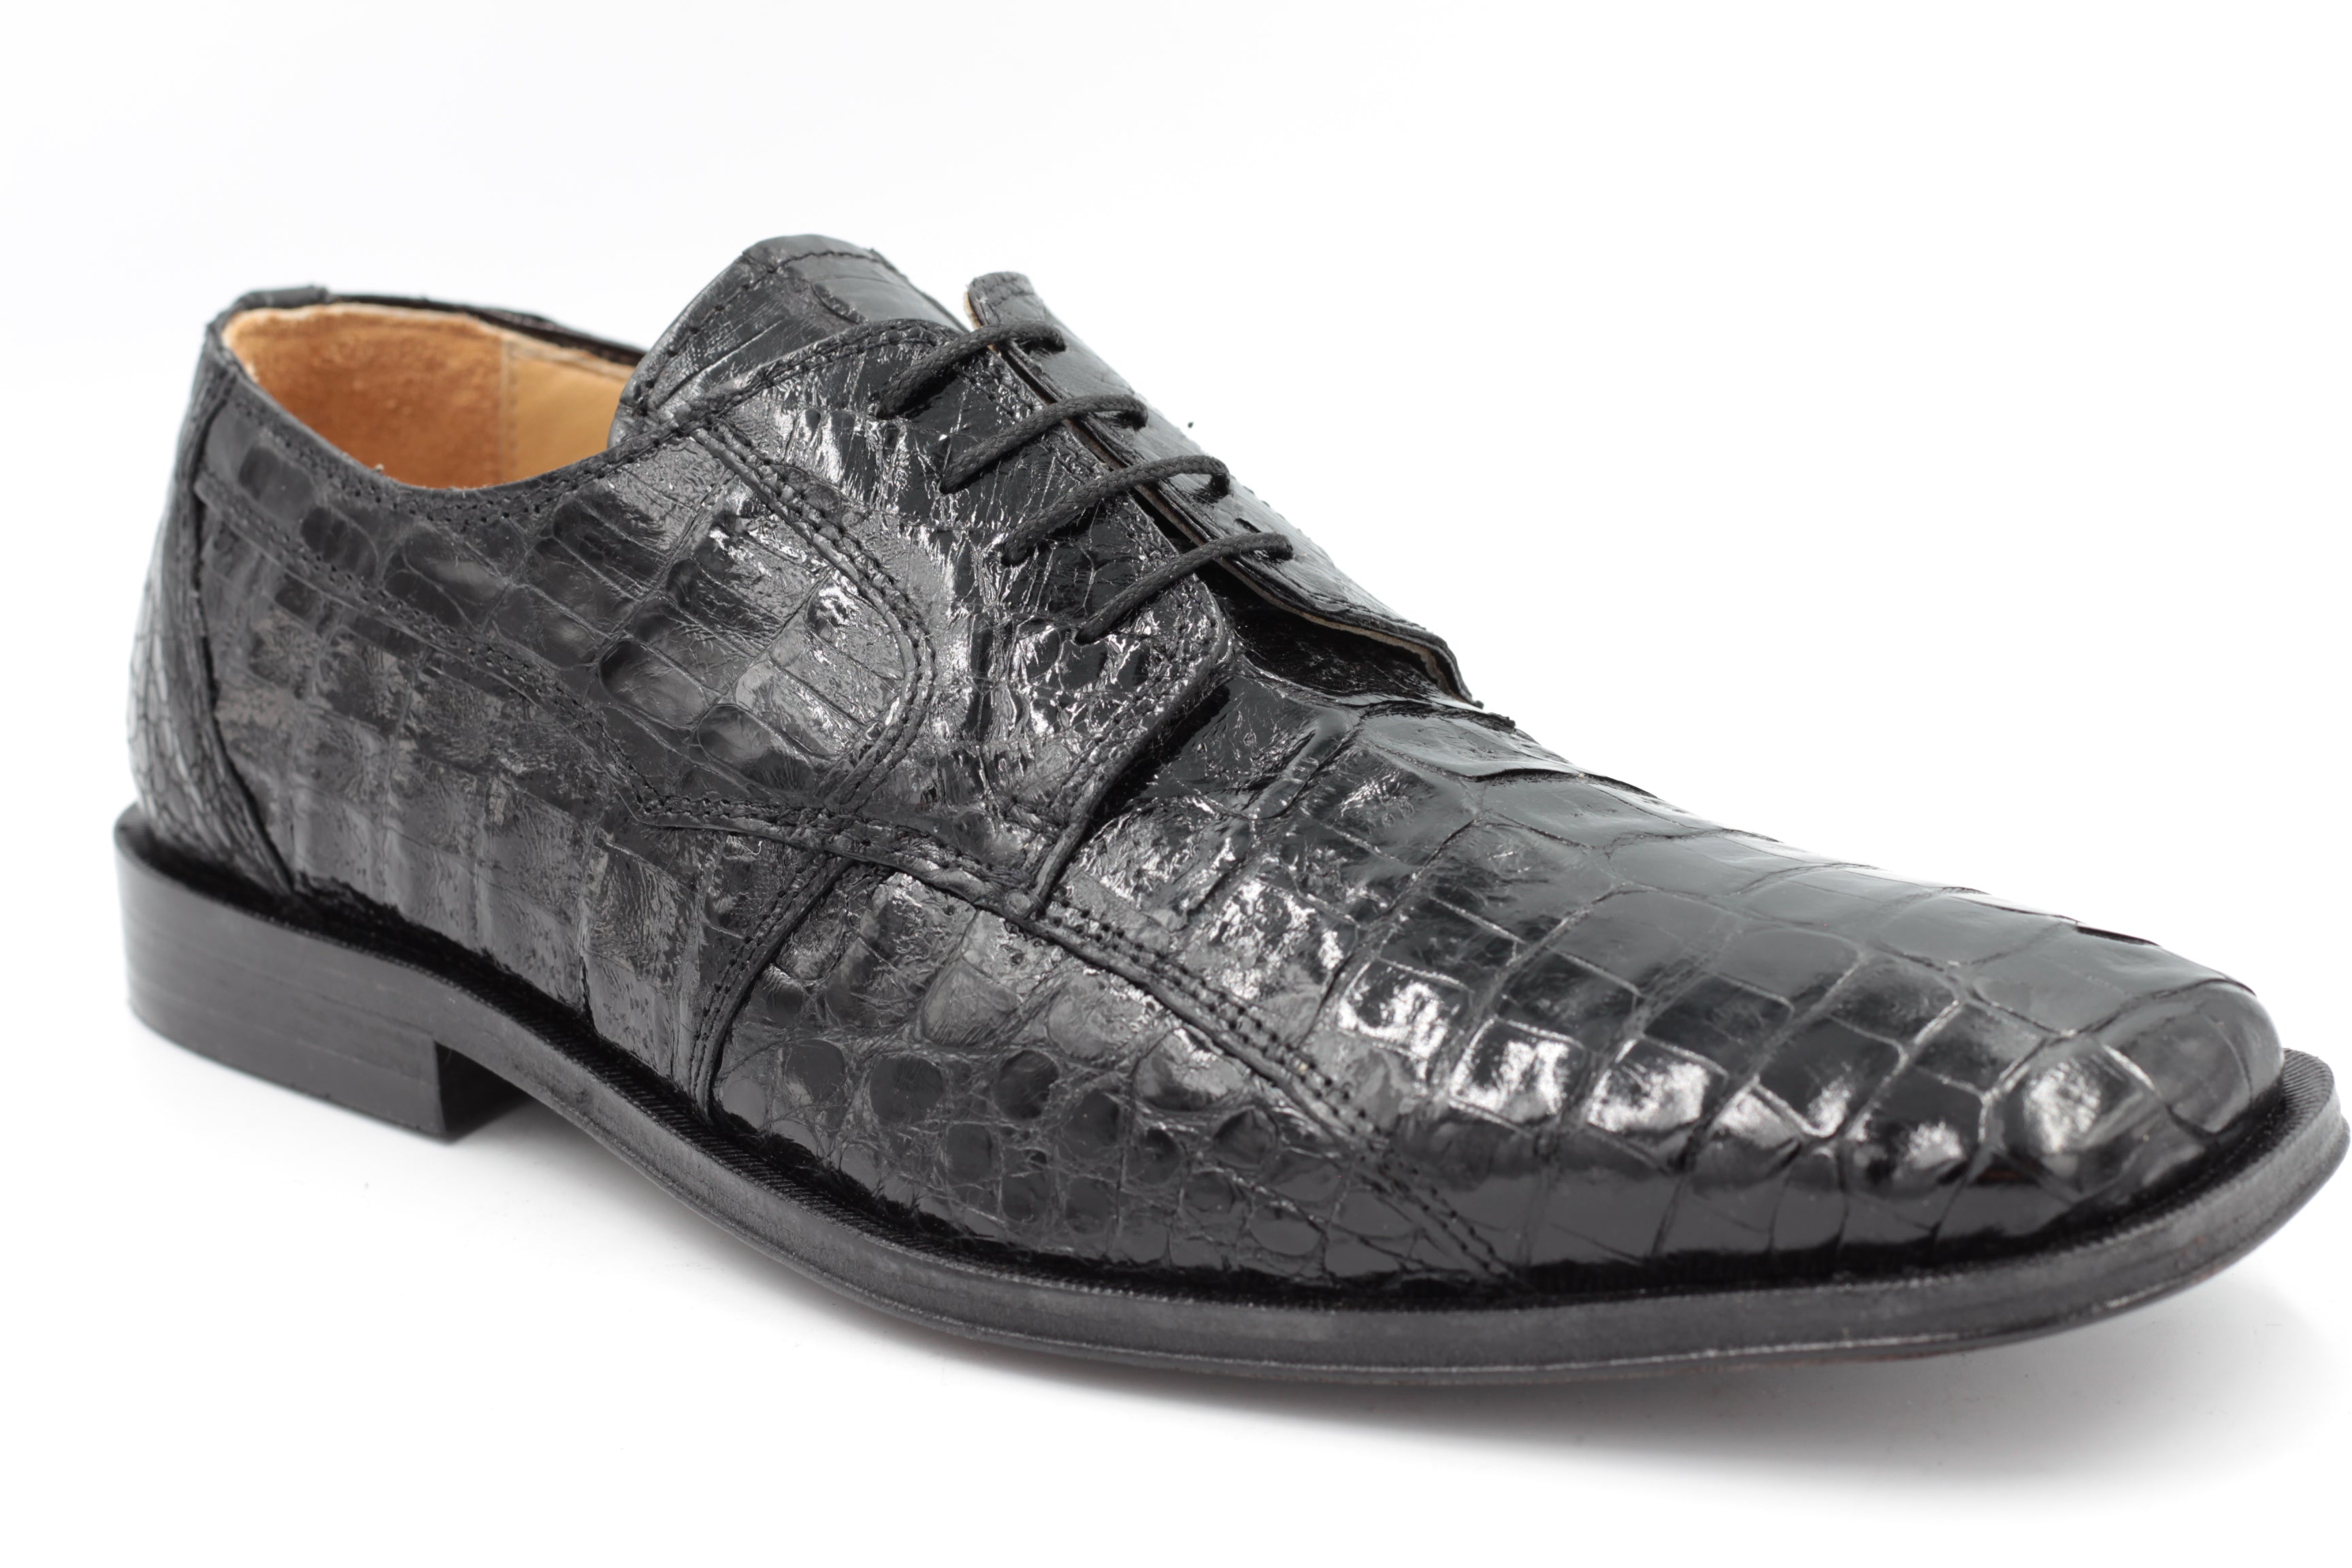 David Eden Unique Exotic Genuine Crocodile Leather Black Shoe Size 10